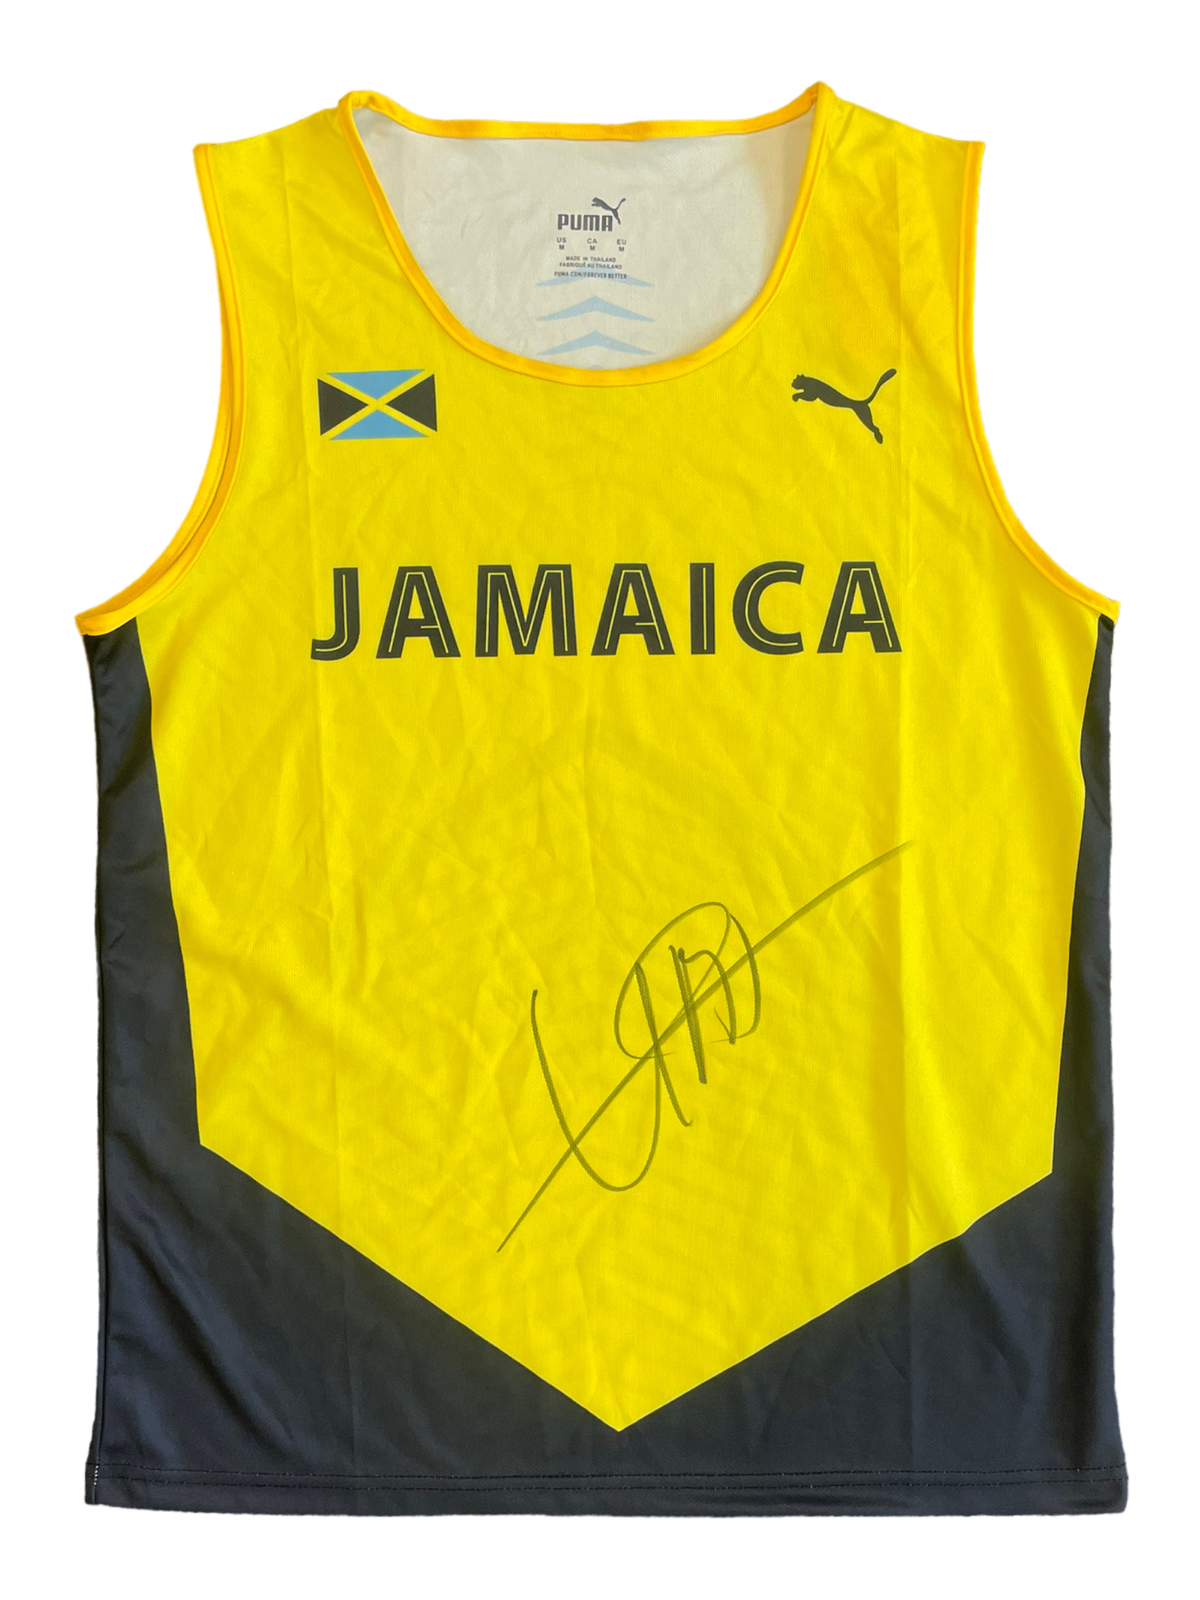 USAIN BOLT SIGNED JAMAICA OLYMPICS RUNNING LONDON 2017 VEST (AFTAL COA)